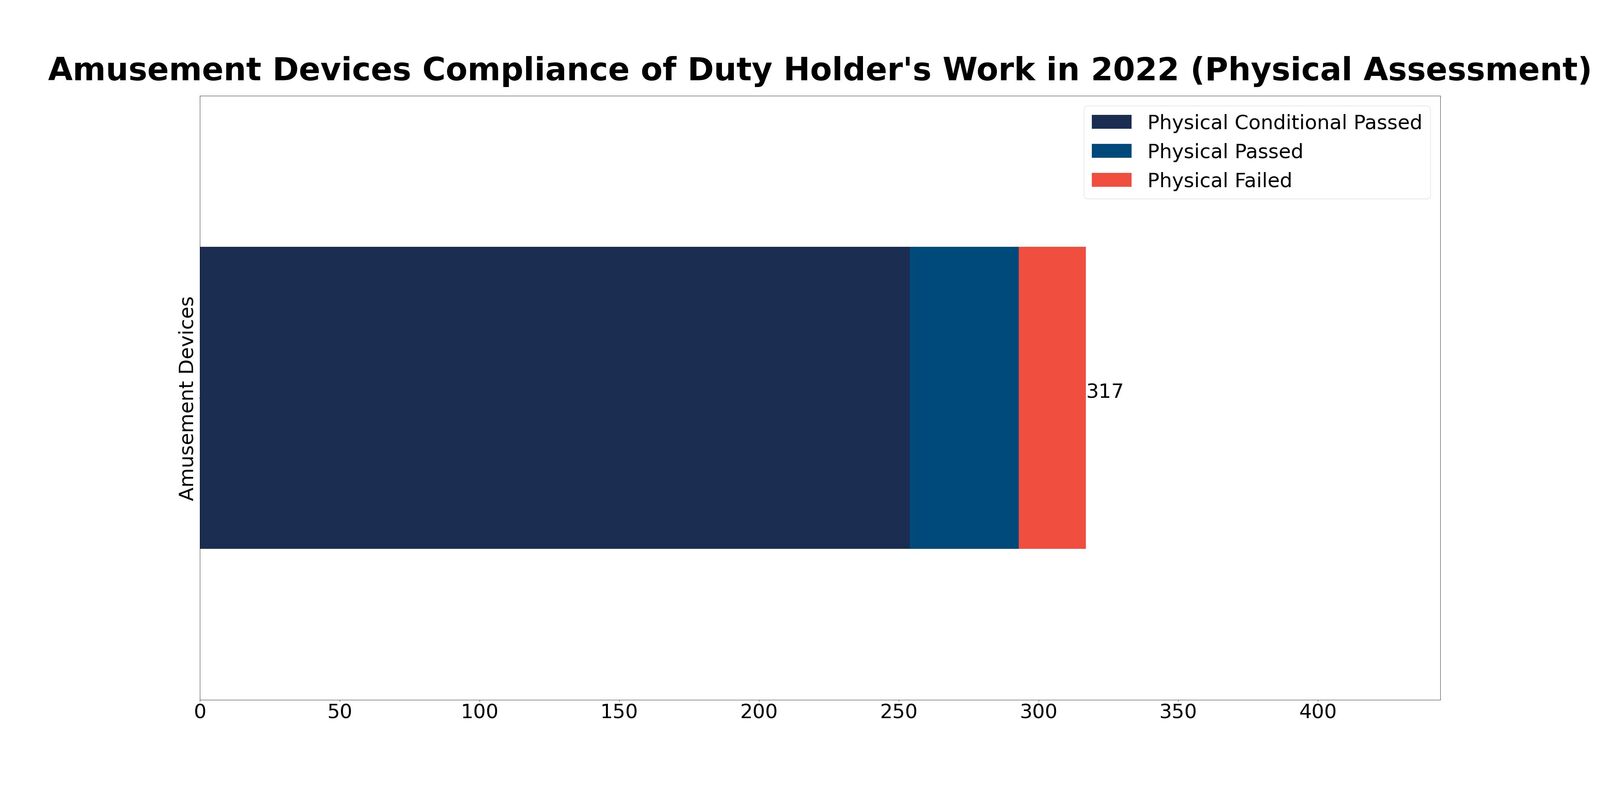 Amusement-Devices-Compliance-Duty-Holder-2022-Physical-Assessment.jpg